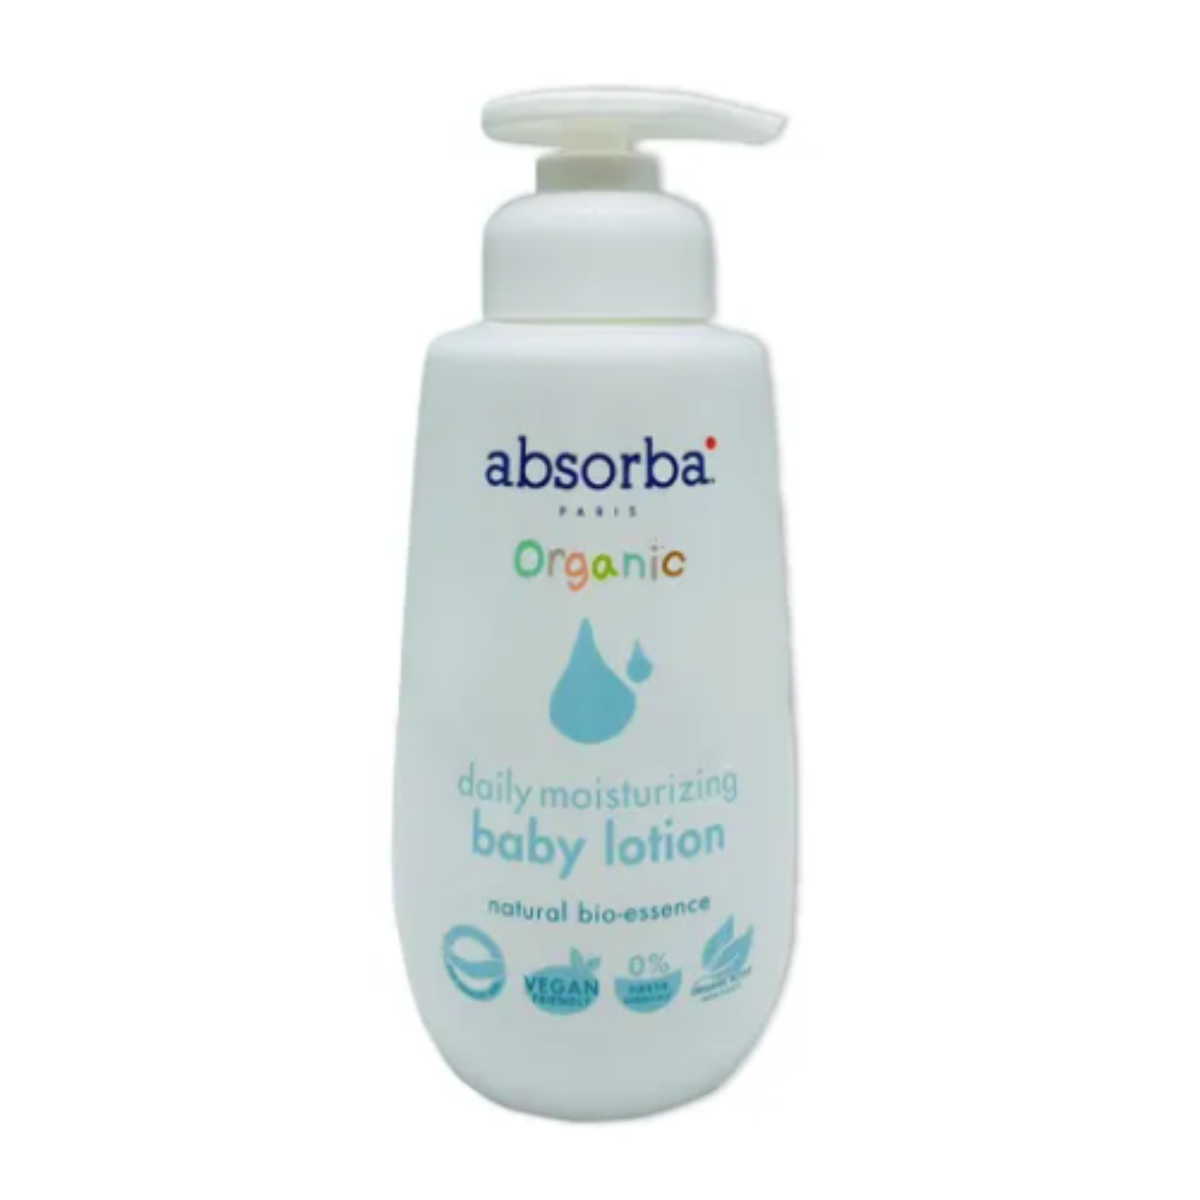 Absorba Organic Daily Moisturizing Baby Lotion (280ml)